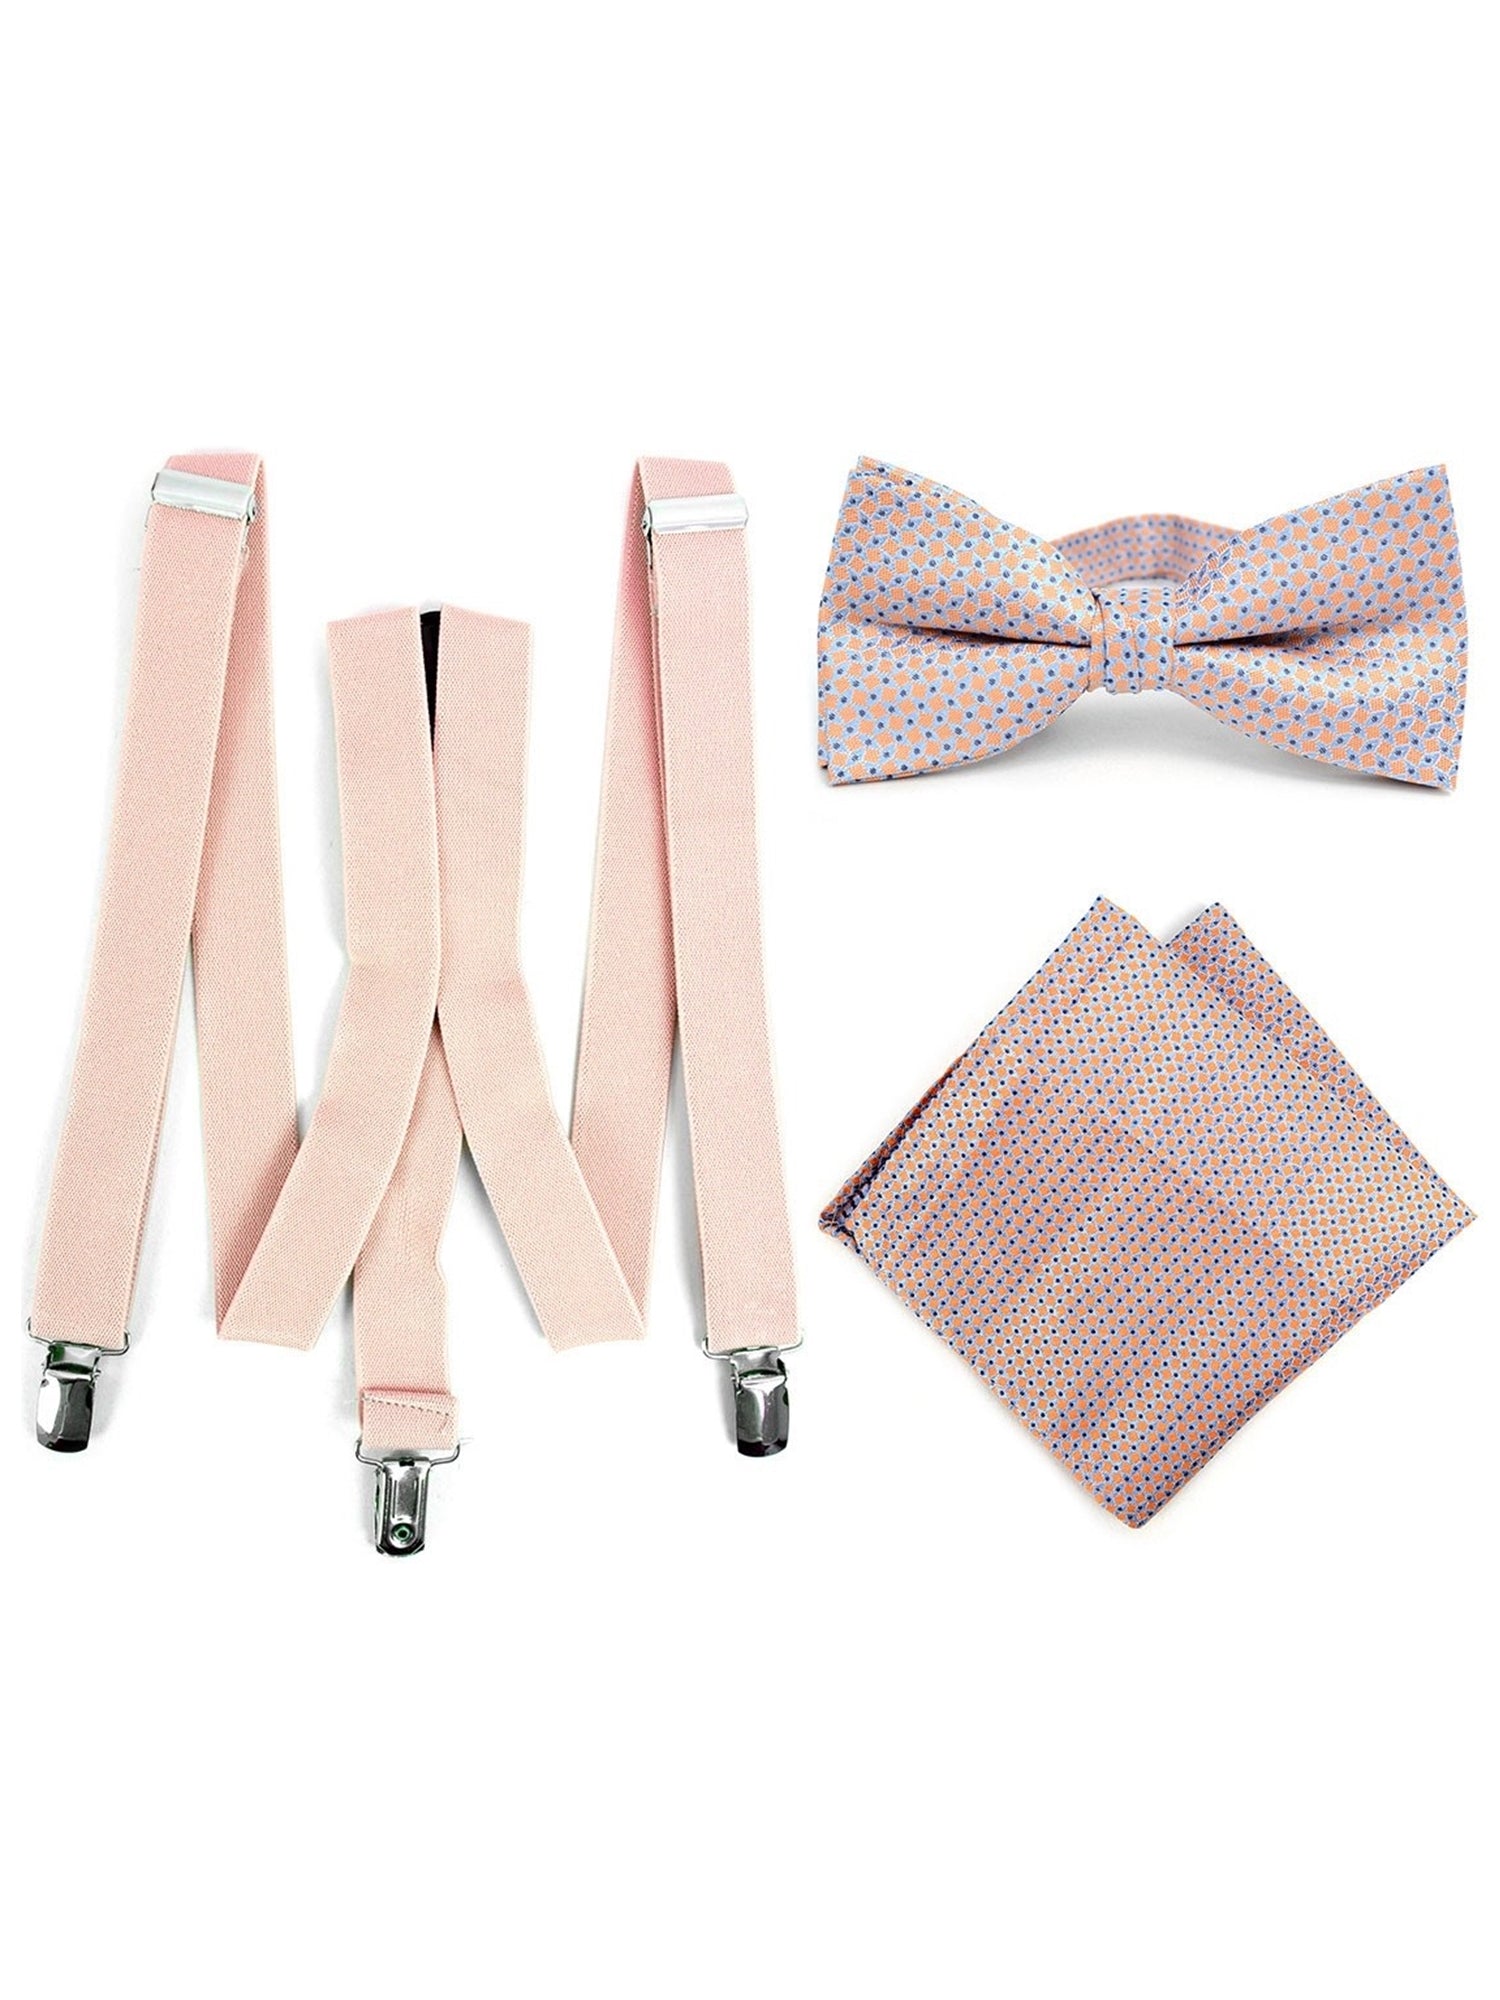 Men's 3 PC Clip-on Suspenders, Bow Tie & Hanky Sets Men's Solid Color Bow Tie TheDapperTie Peach # 1 Regular 